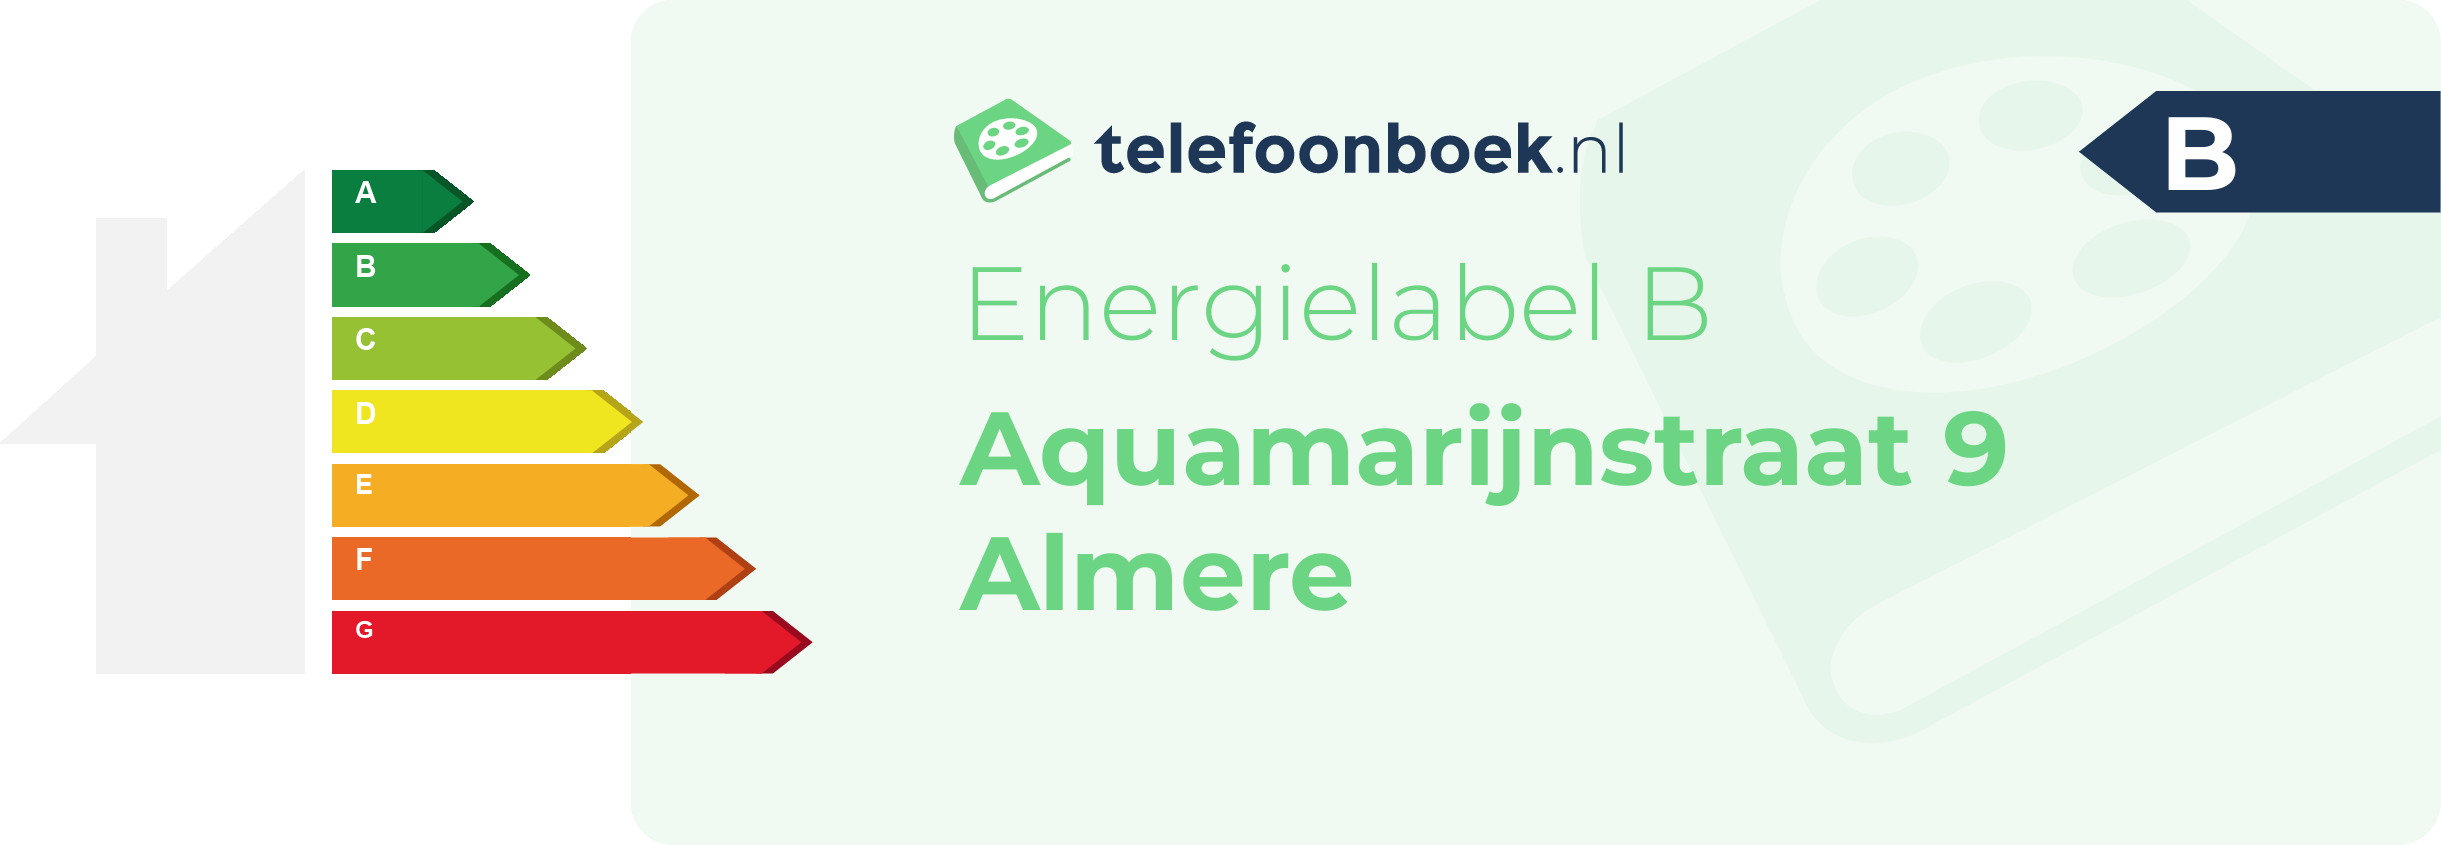 Energielabel Aquamarijnstraat 9 Almere